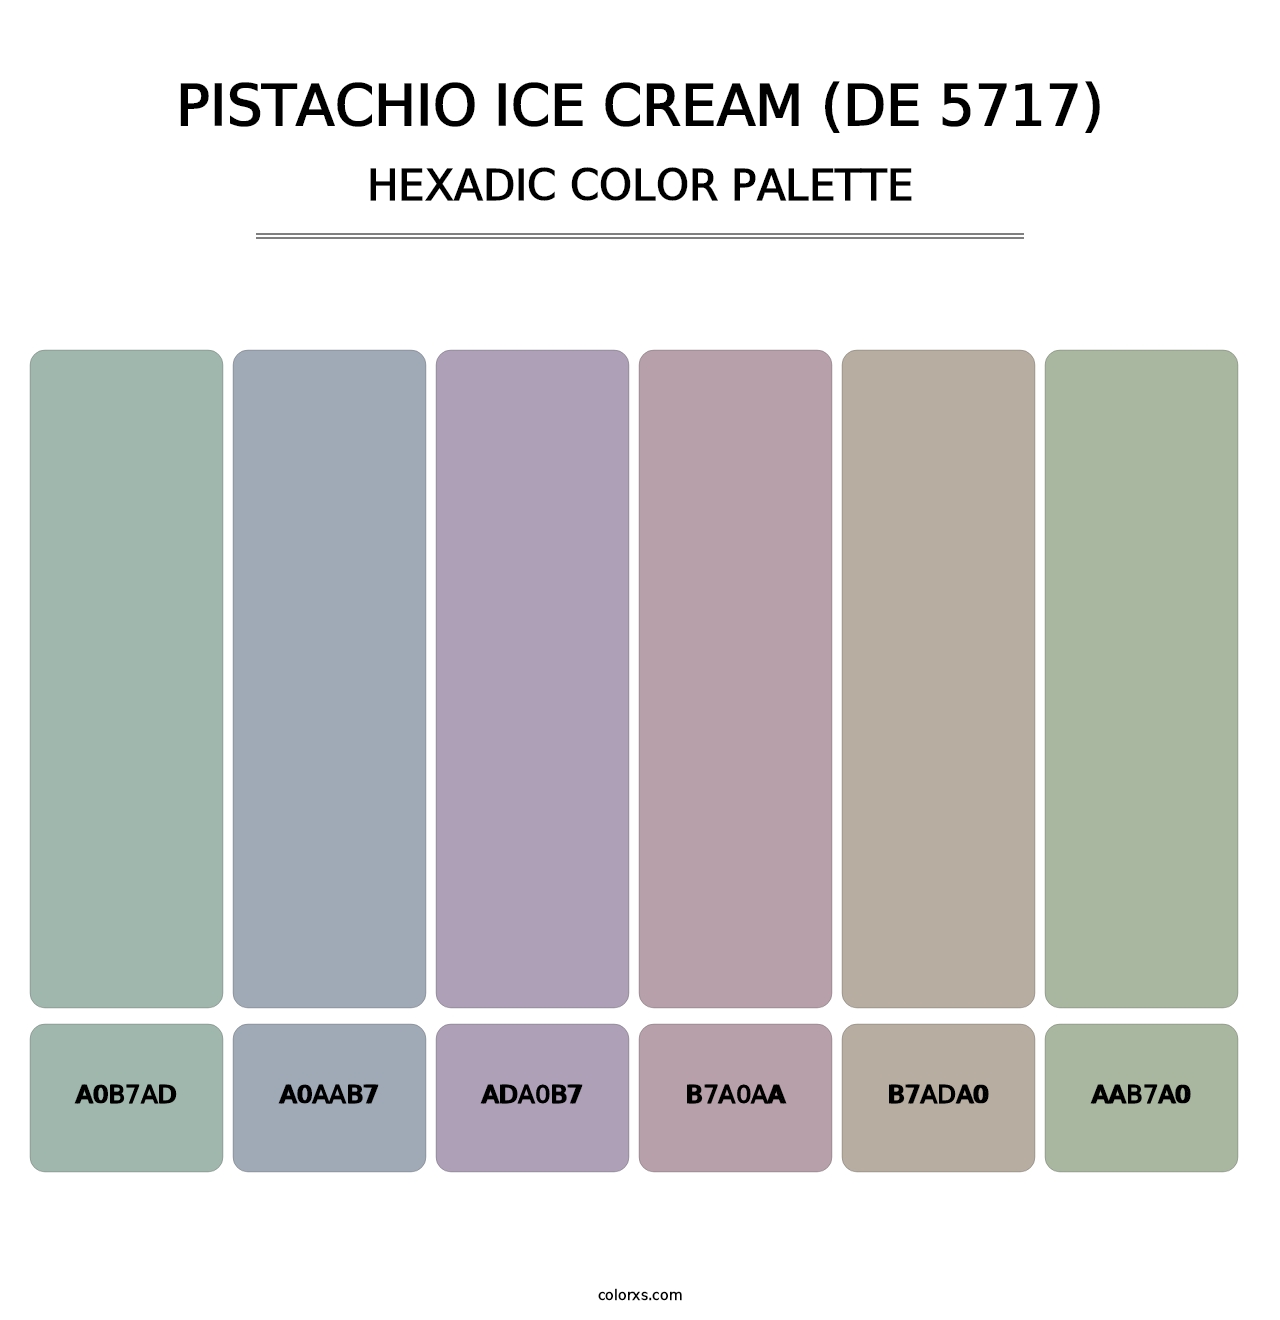 Pistachio Ice Cream (DE 5717) - Hexadic Color Palette